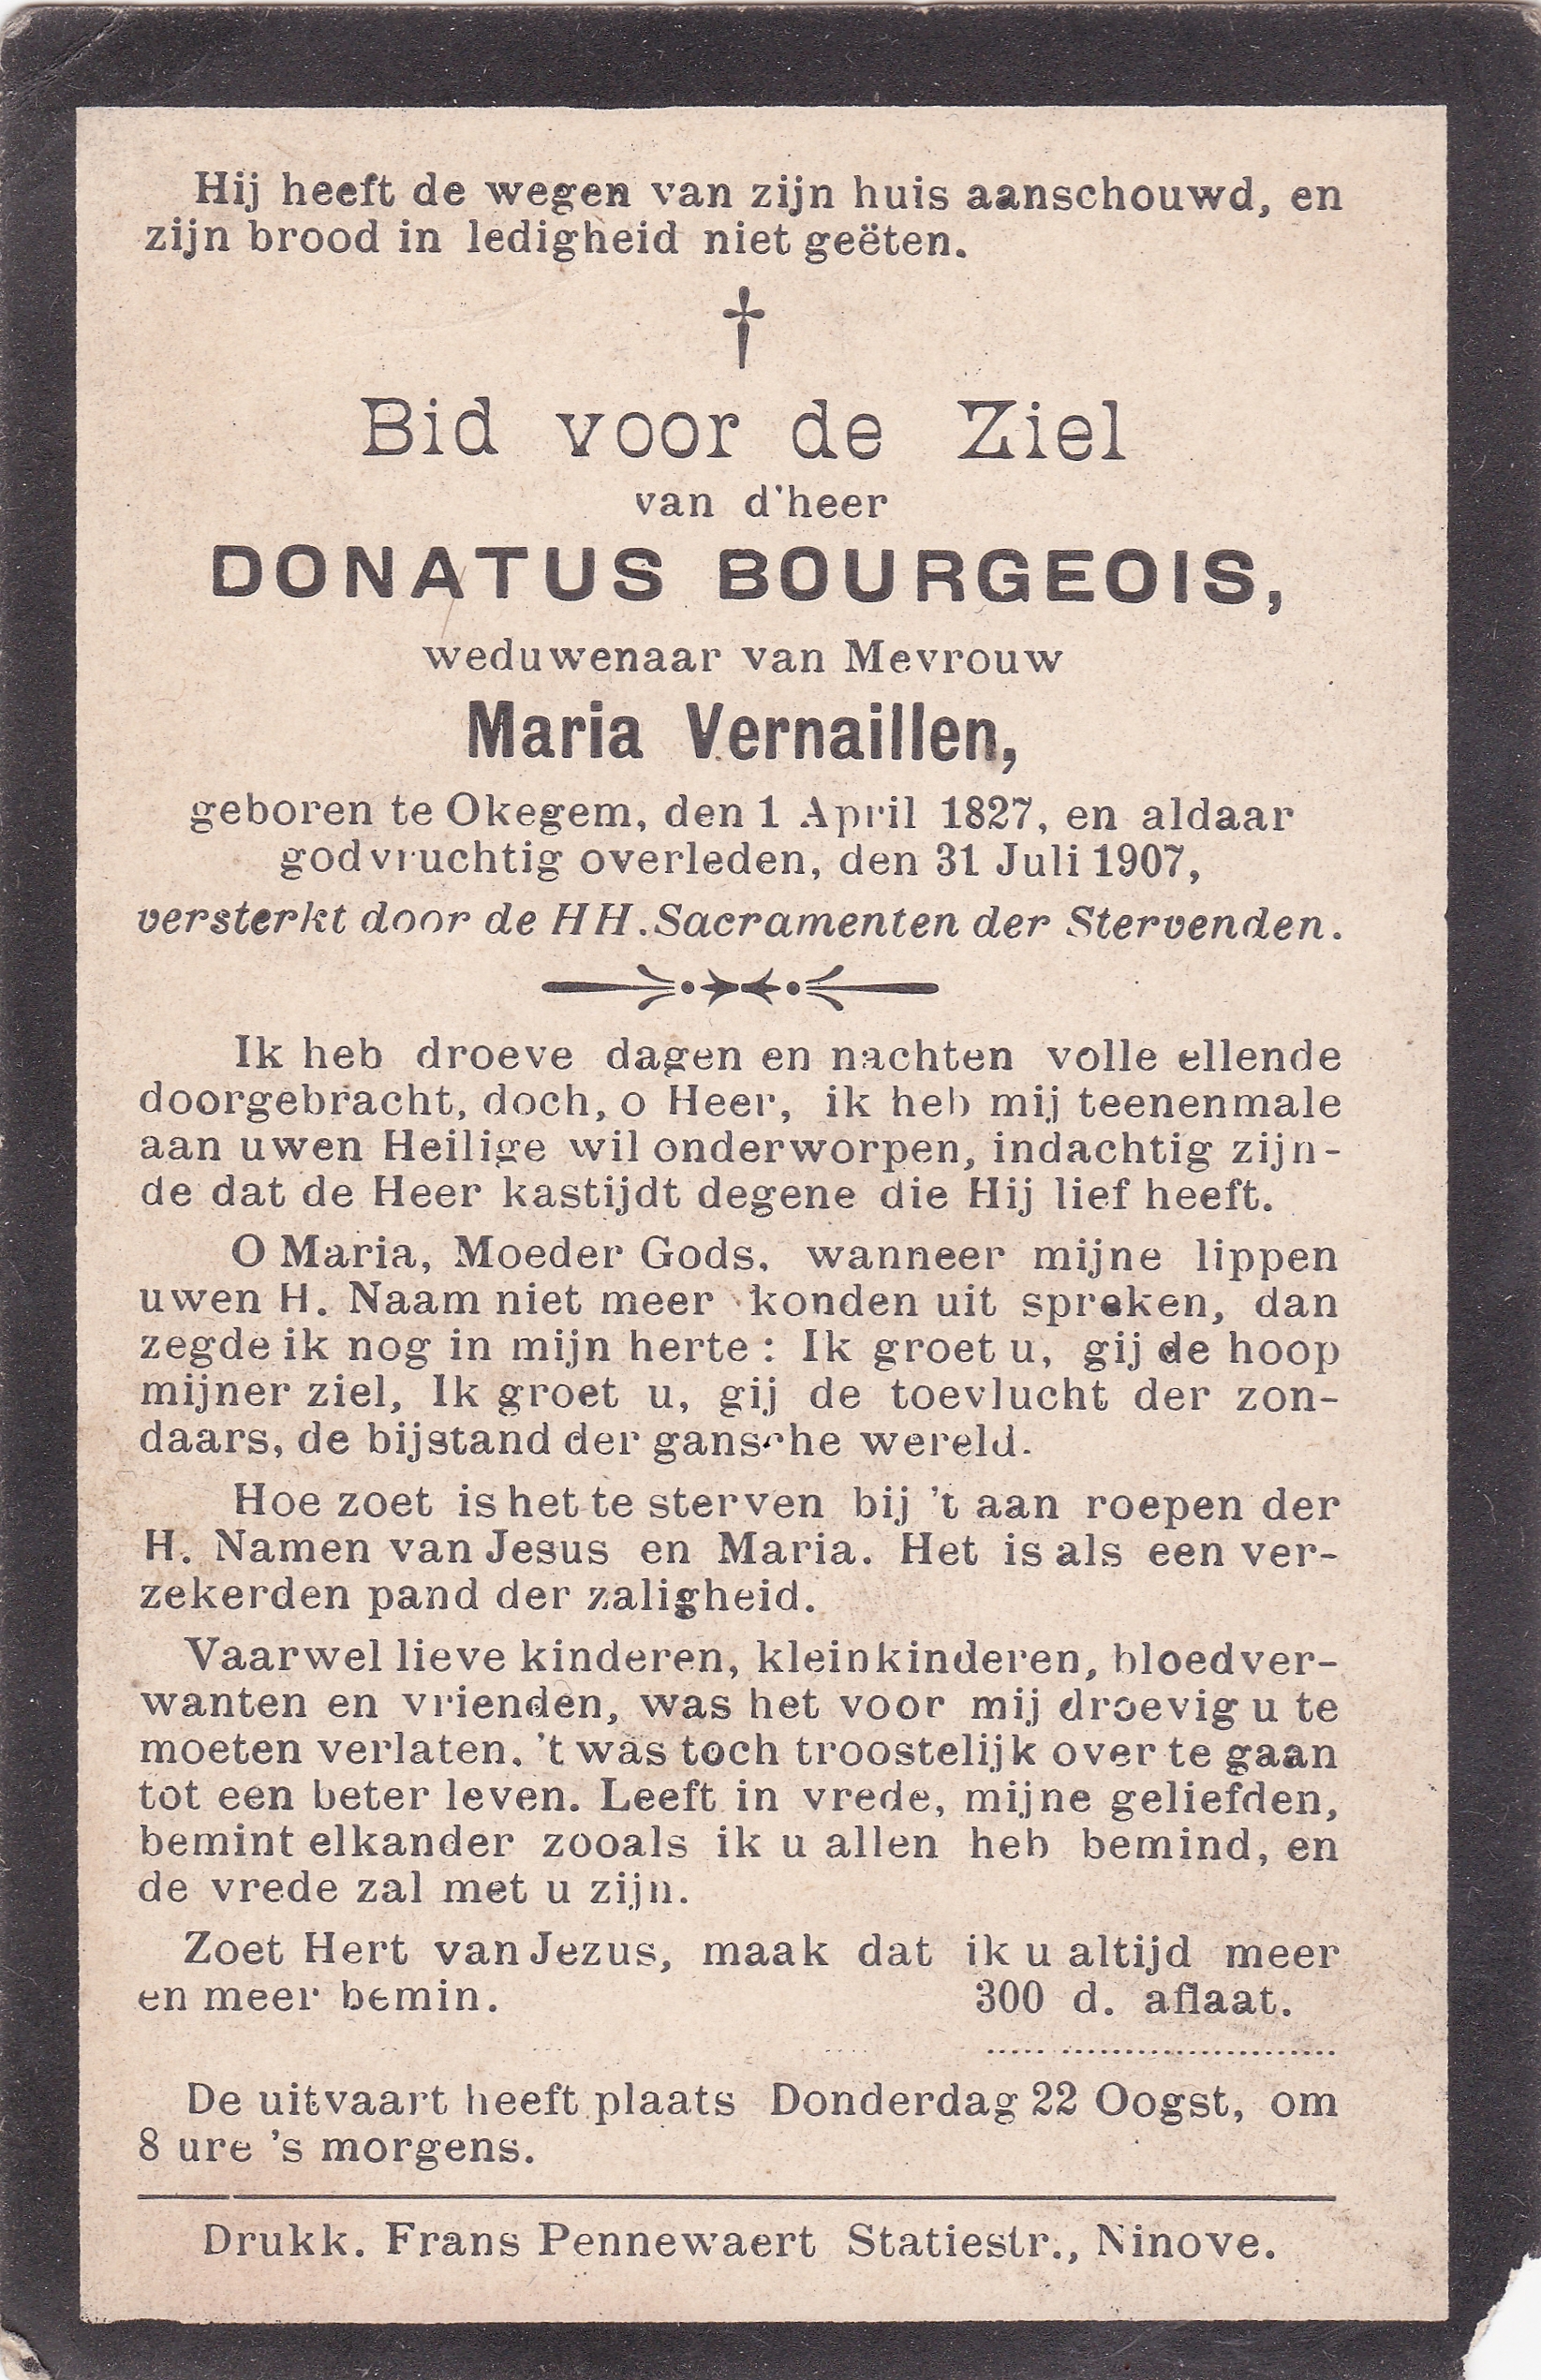 Bourgeois Donatus